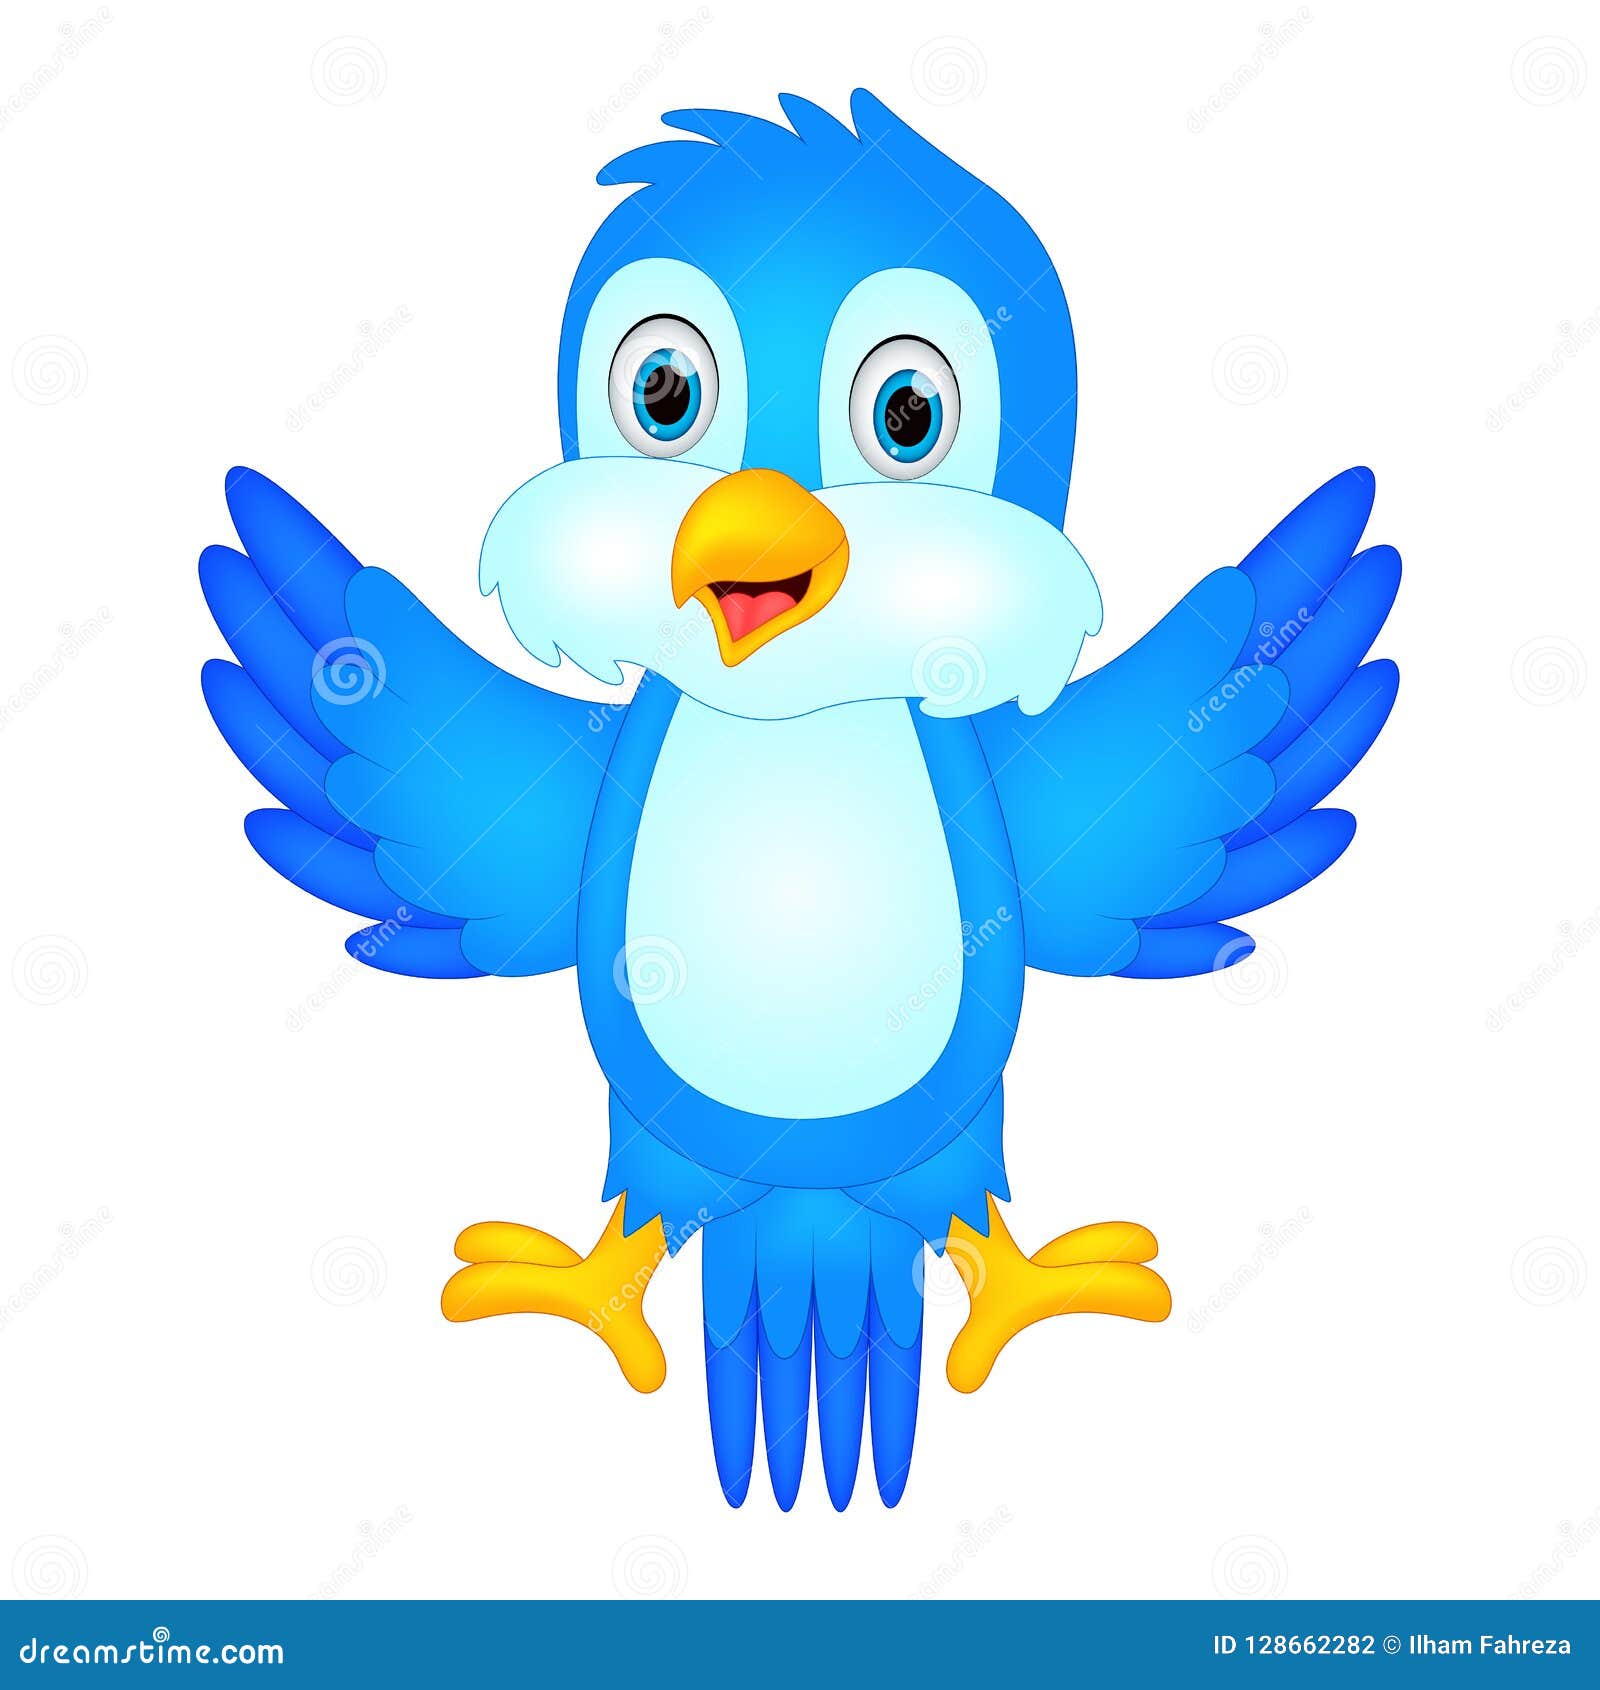 Cute bird cartoon stock vector. Illustration of mascot - 128662282